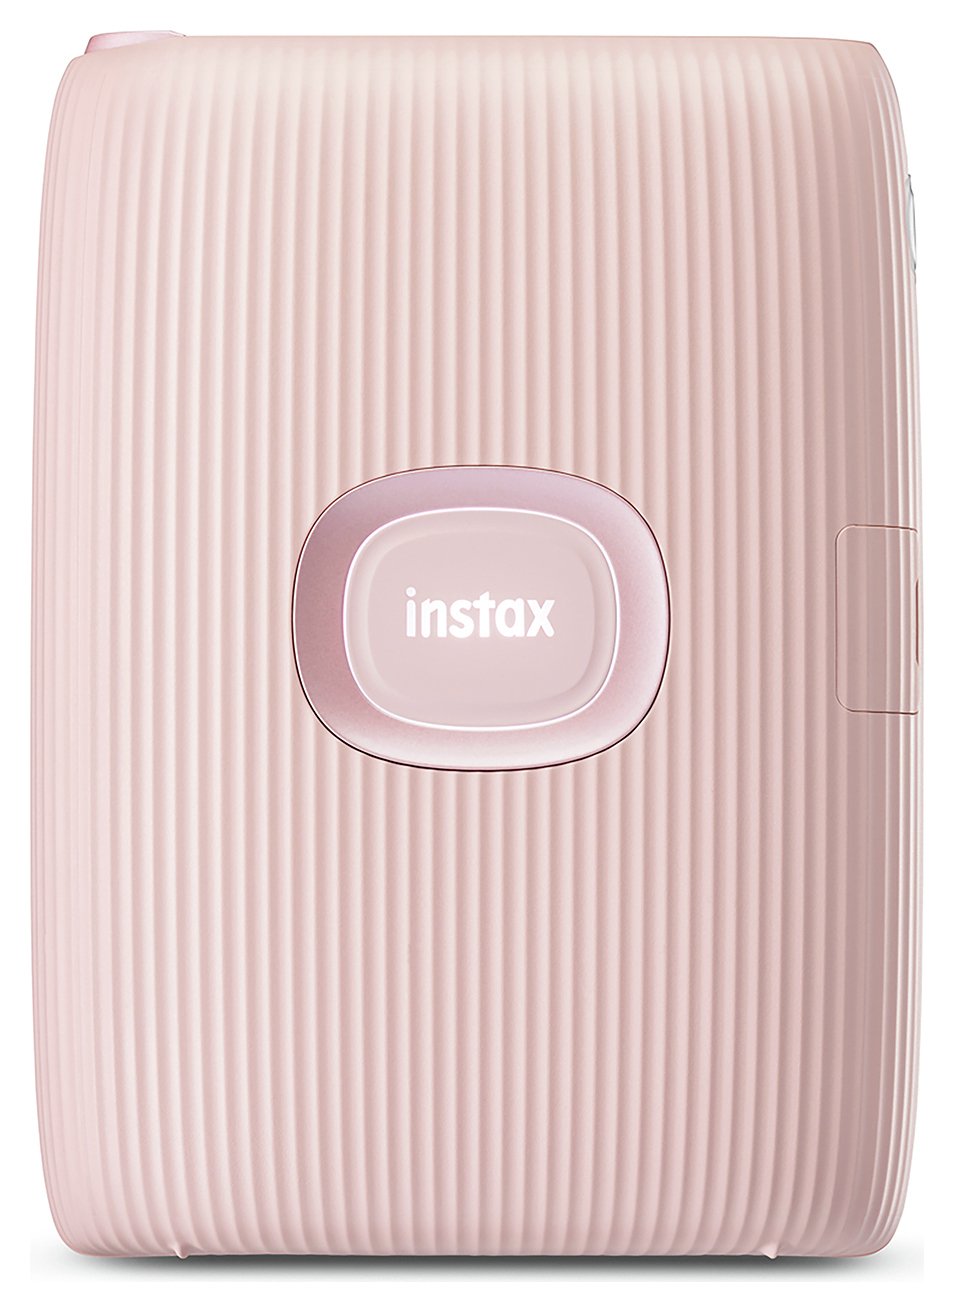 instax mini Link 2 Smartphone Printer -  Soft Pink